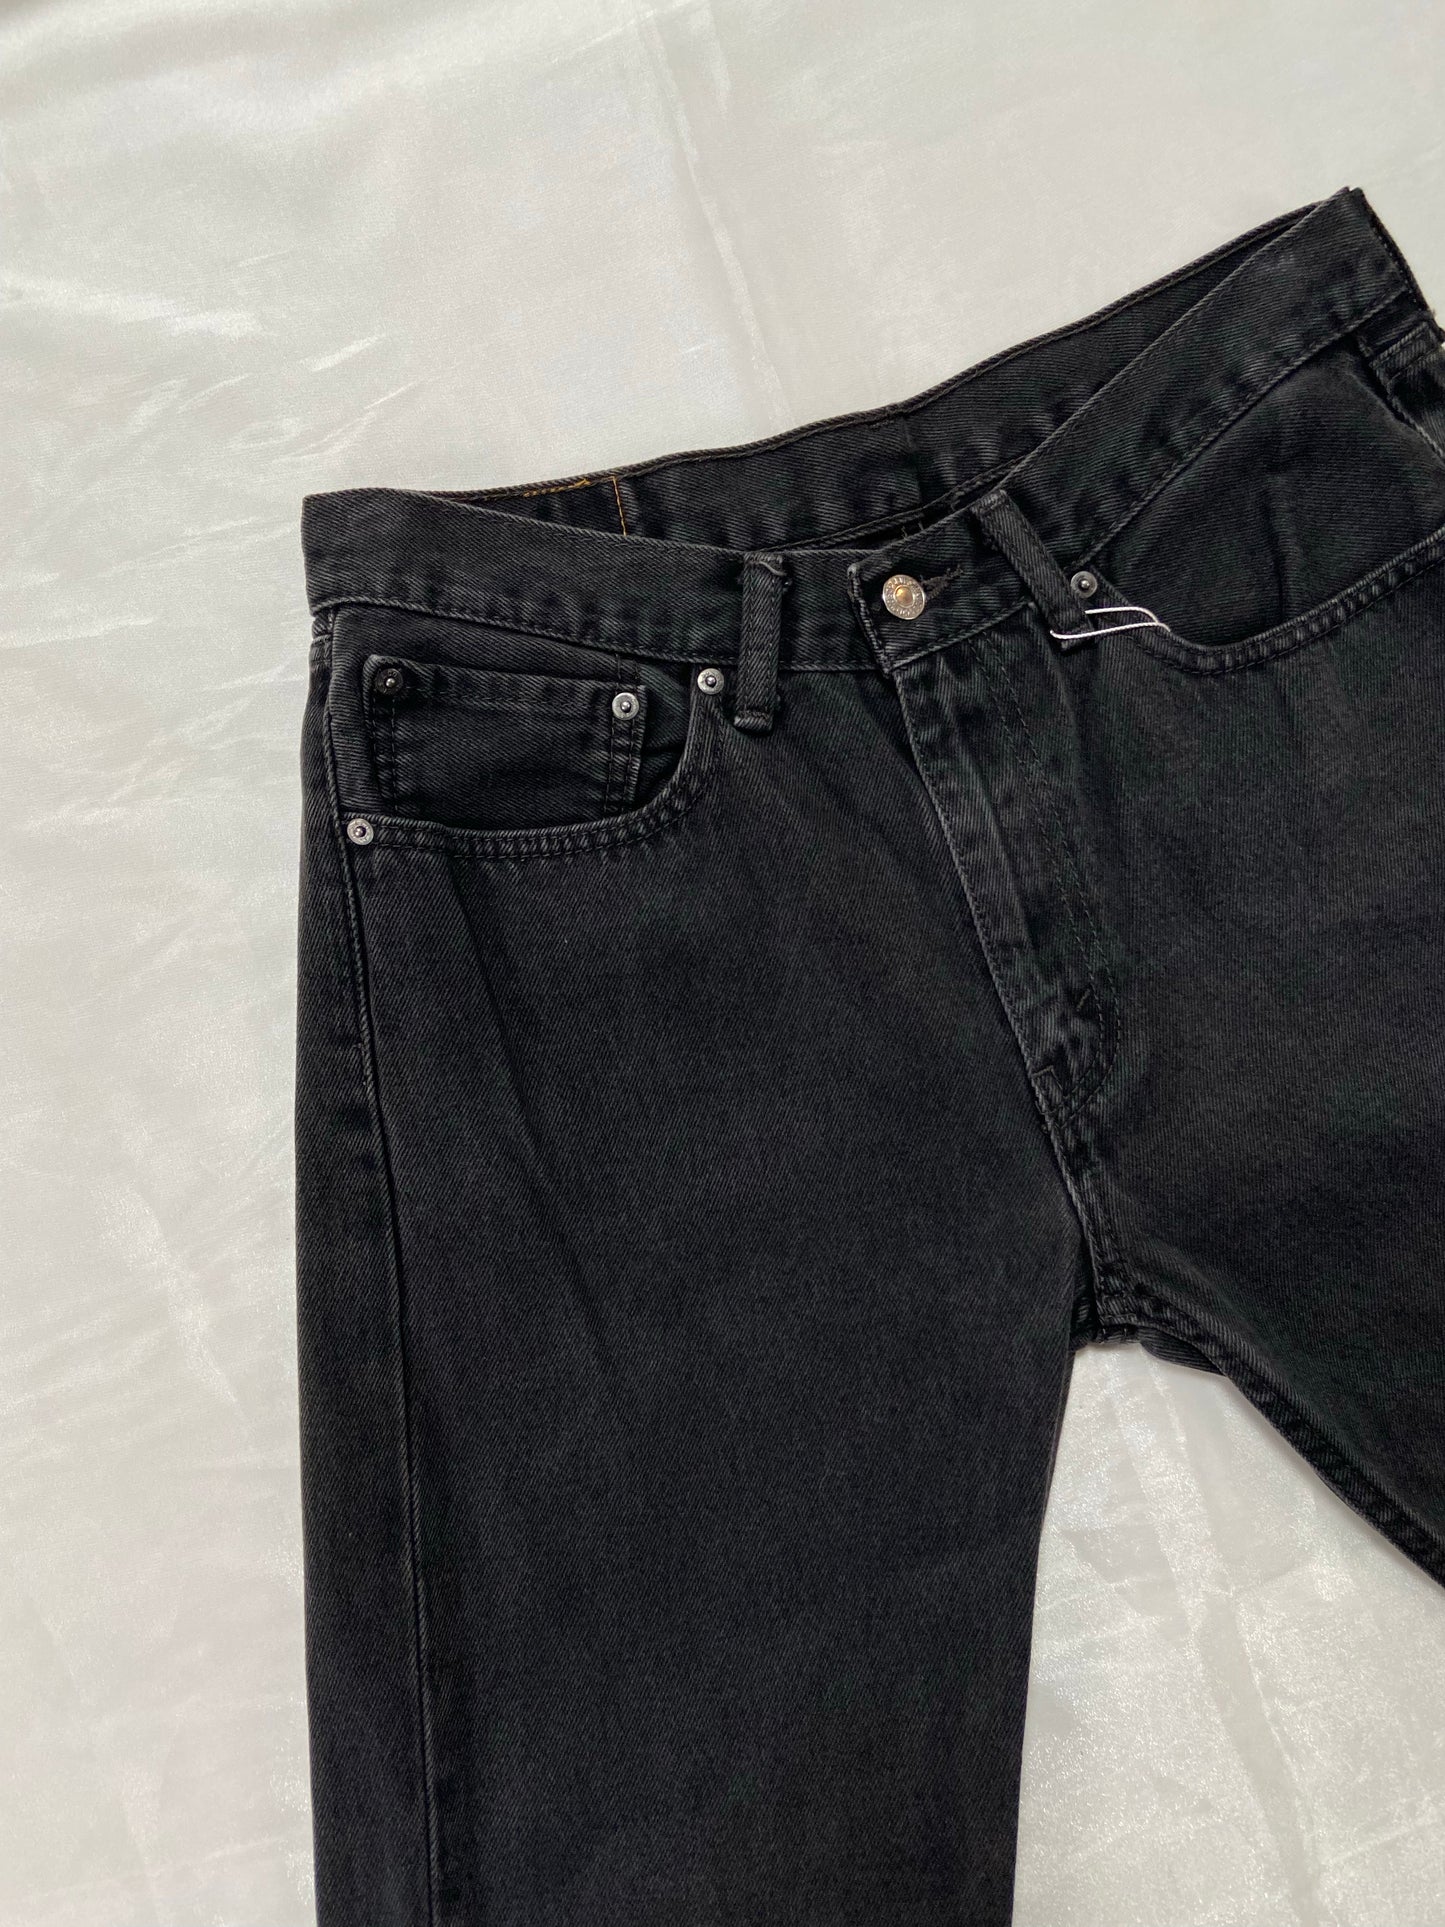 505 Levi’s Black Jeans - 31”